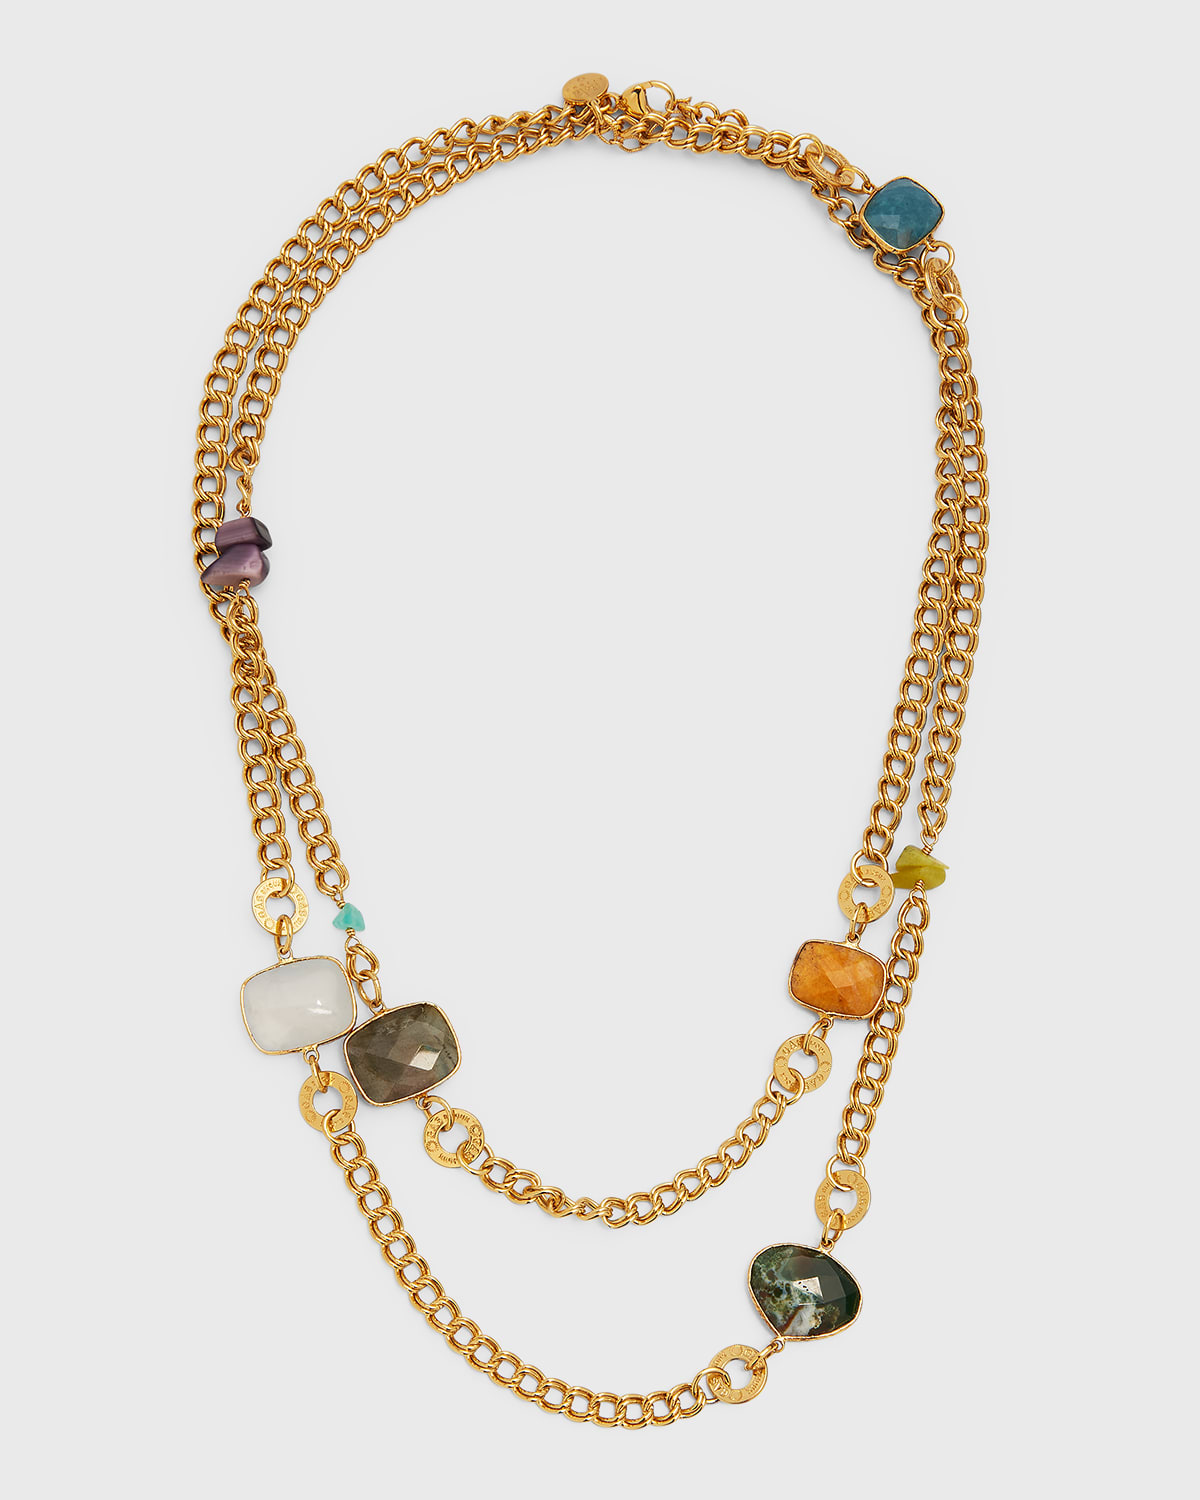 Silene Long Gemstone Chain Necklace, 42"L